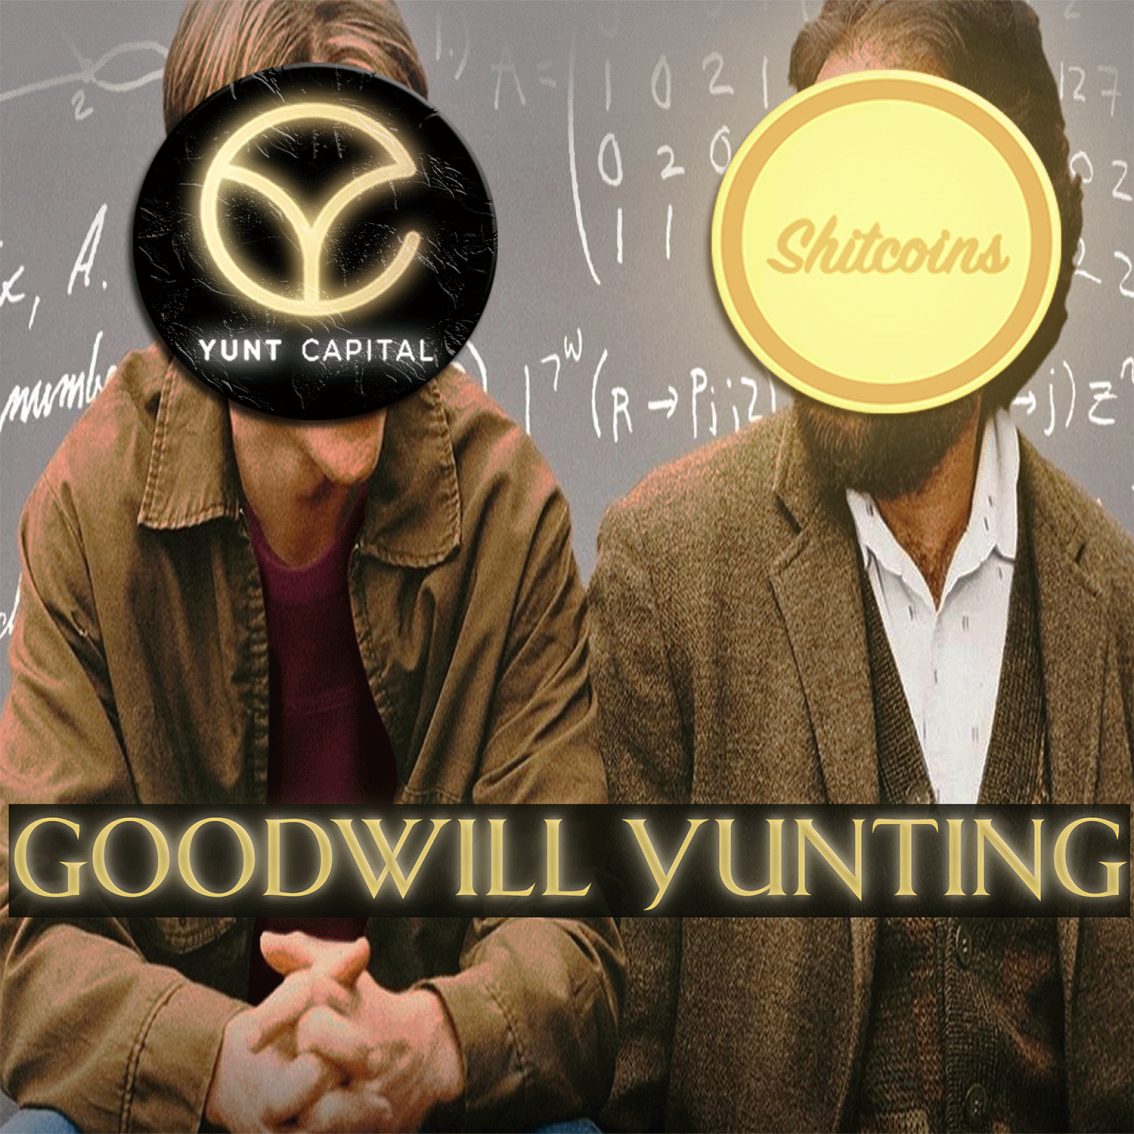 Introducing: GoodWill Yunting